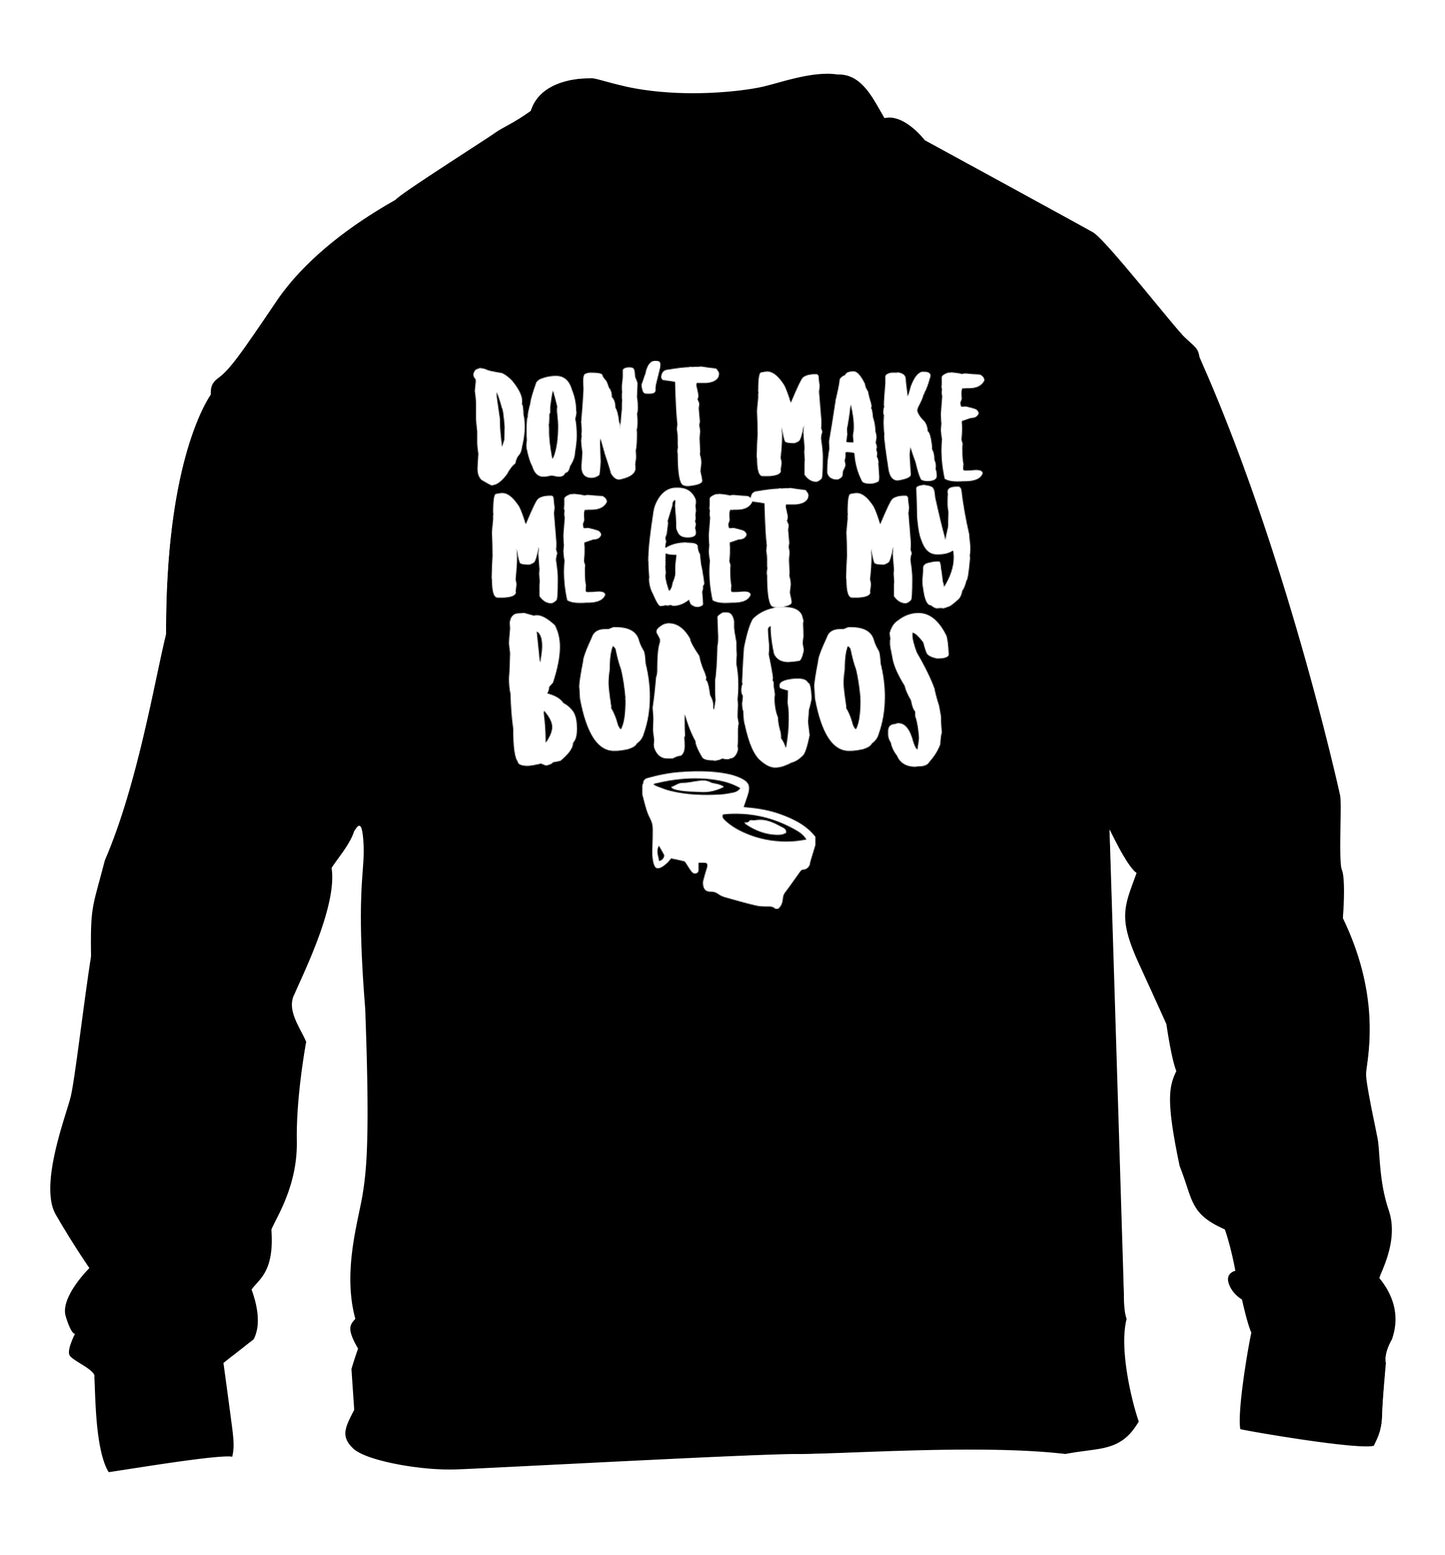 Don't make me get my bongos children's black sweater 12-14 Years